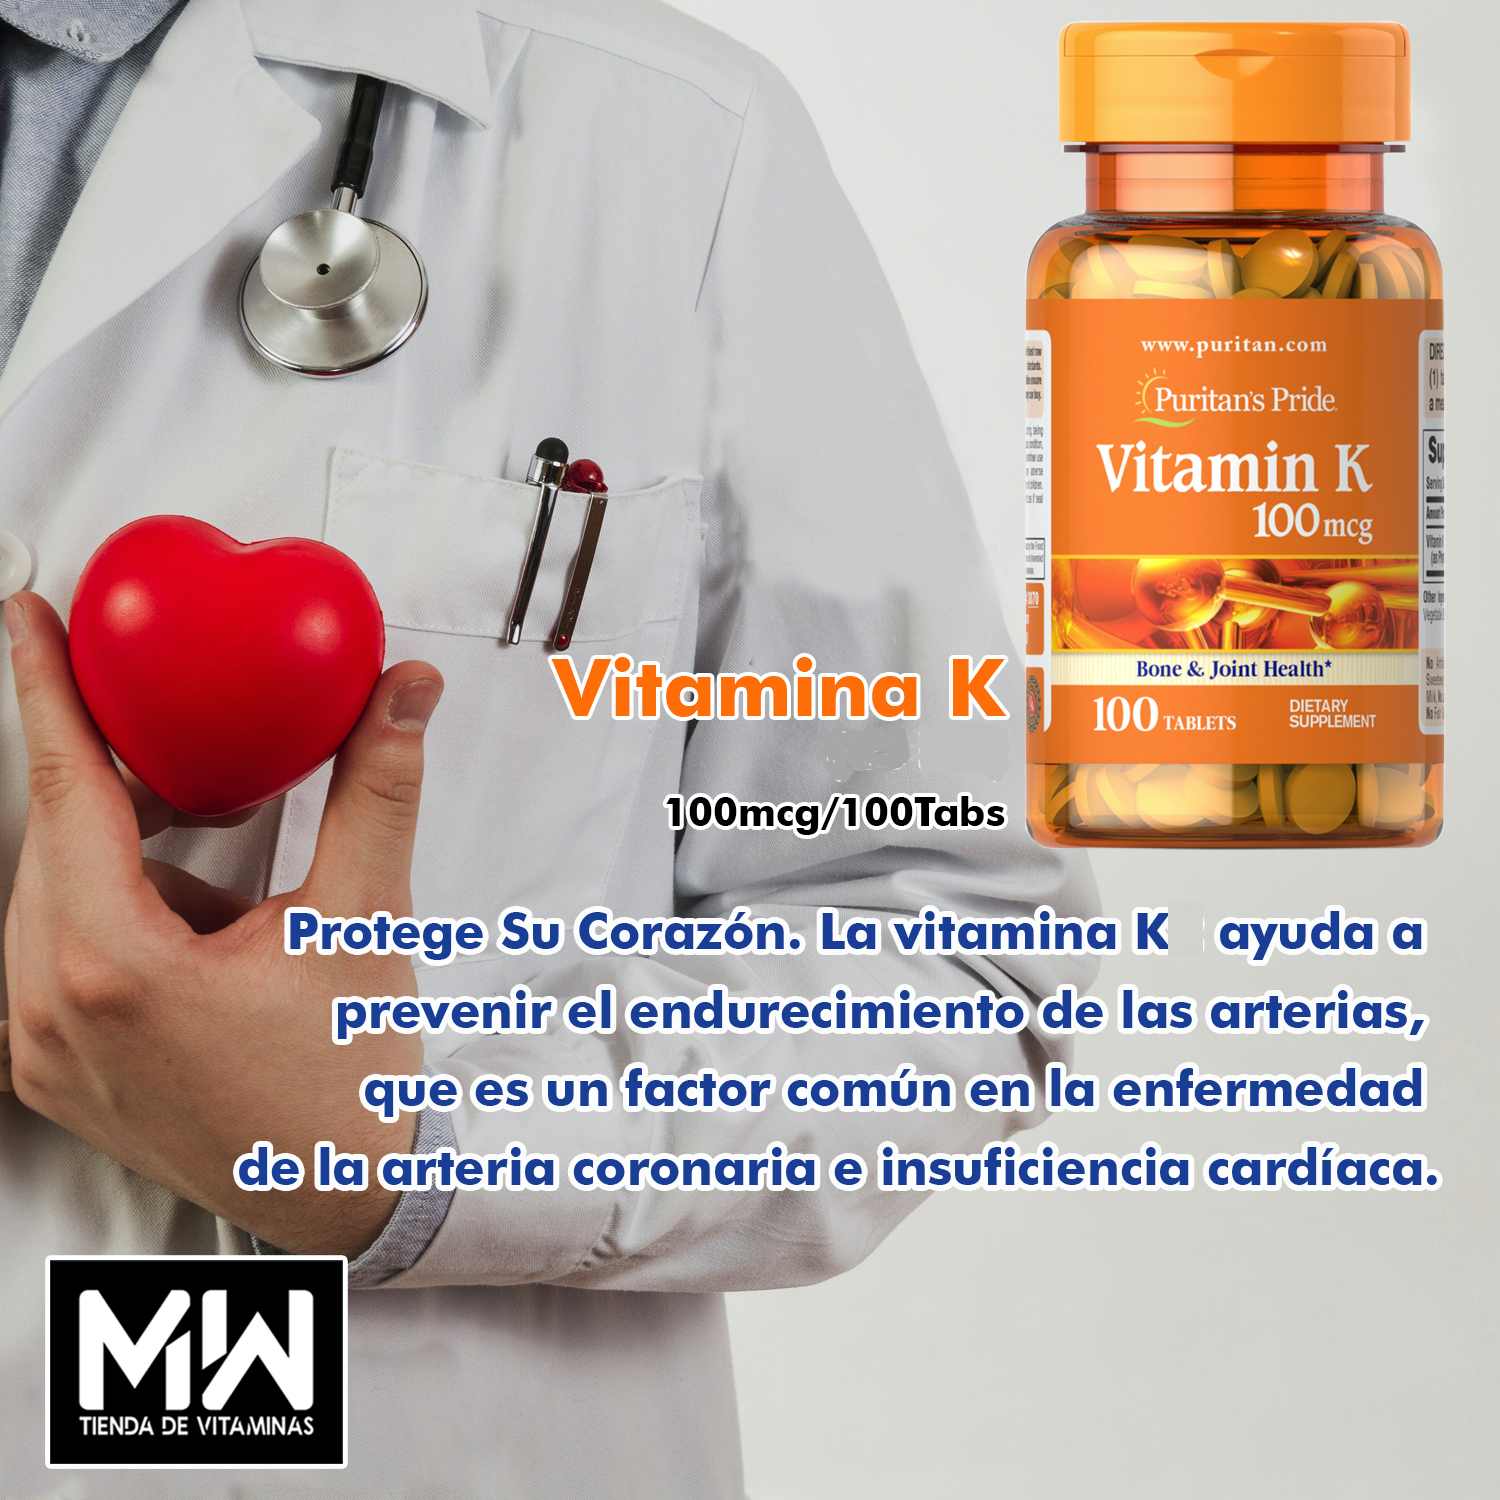 Vitamina K / Vitamin K 100 mcg. 100 Tabs